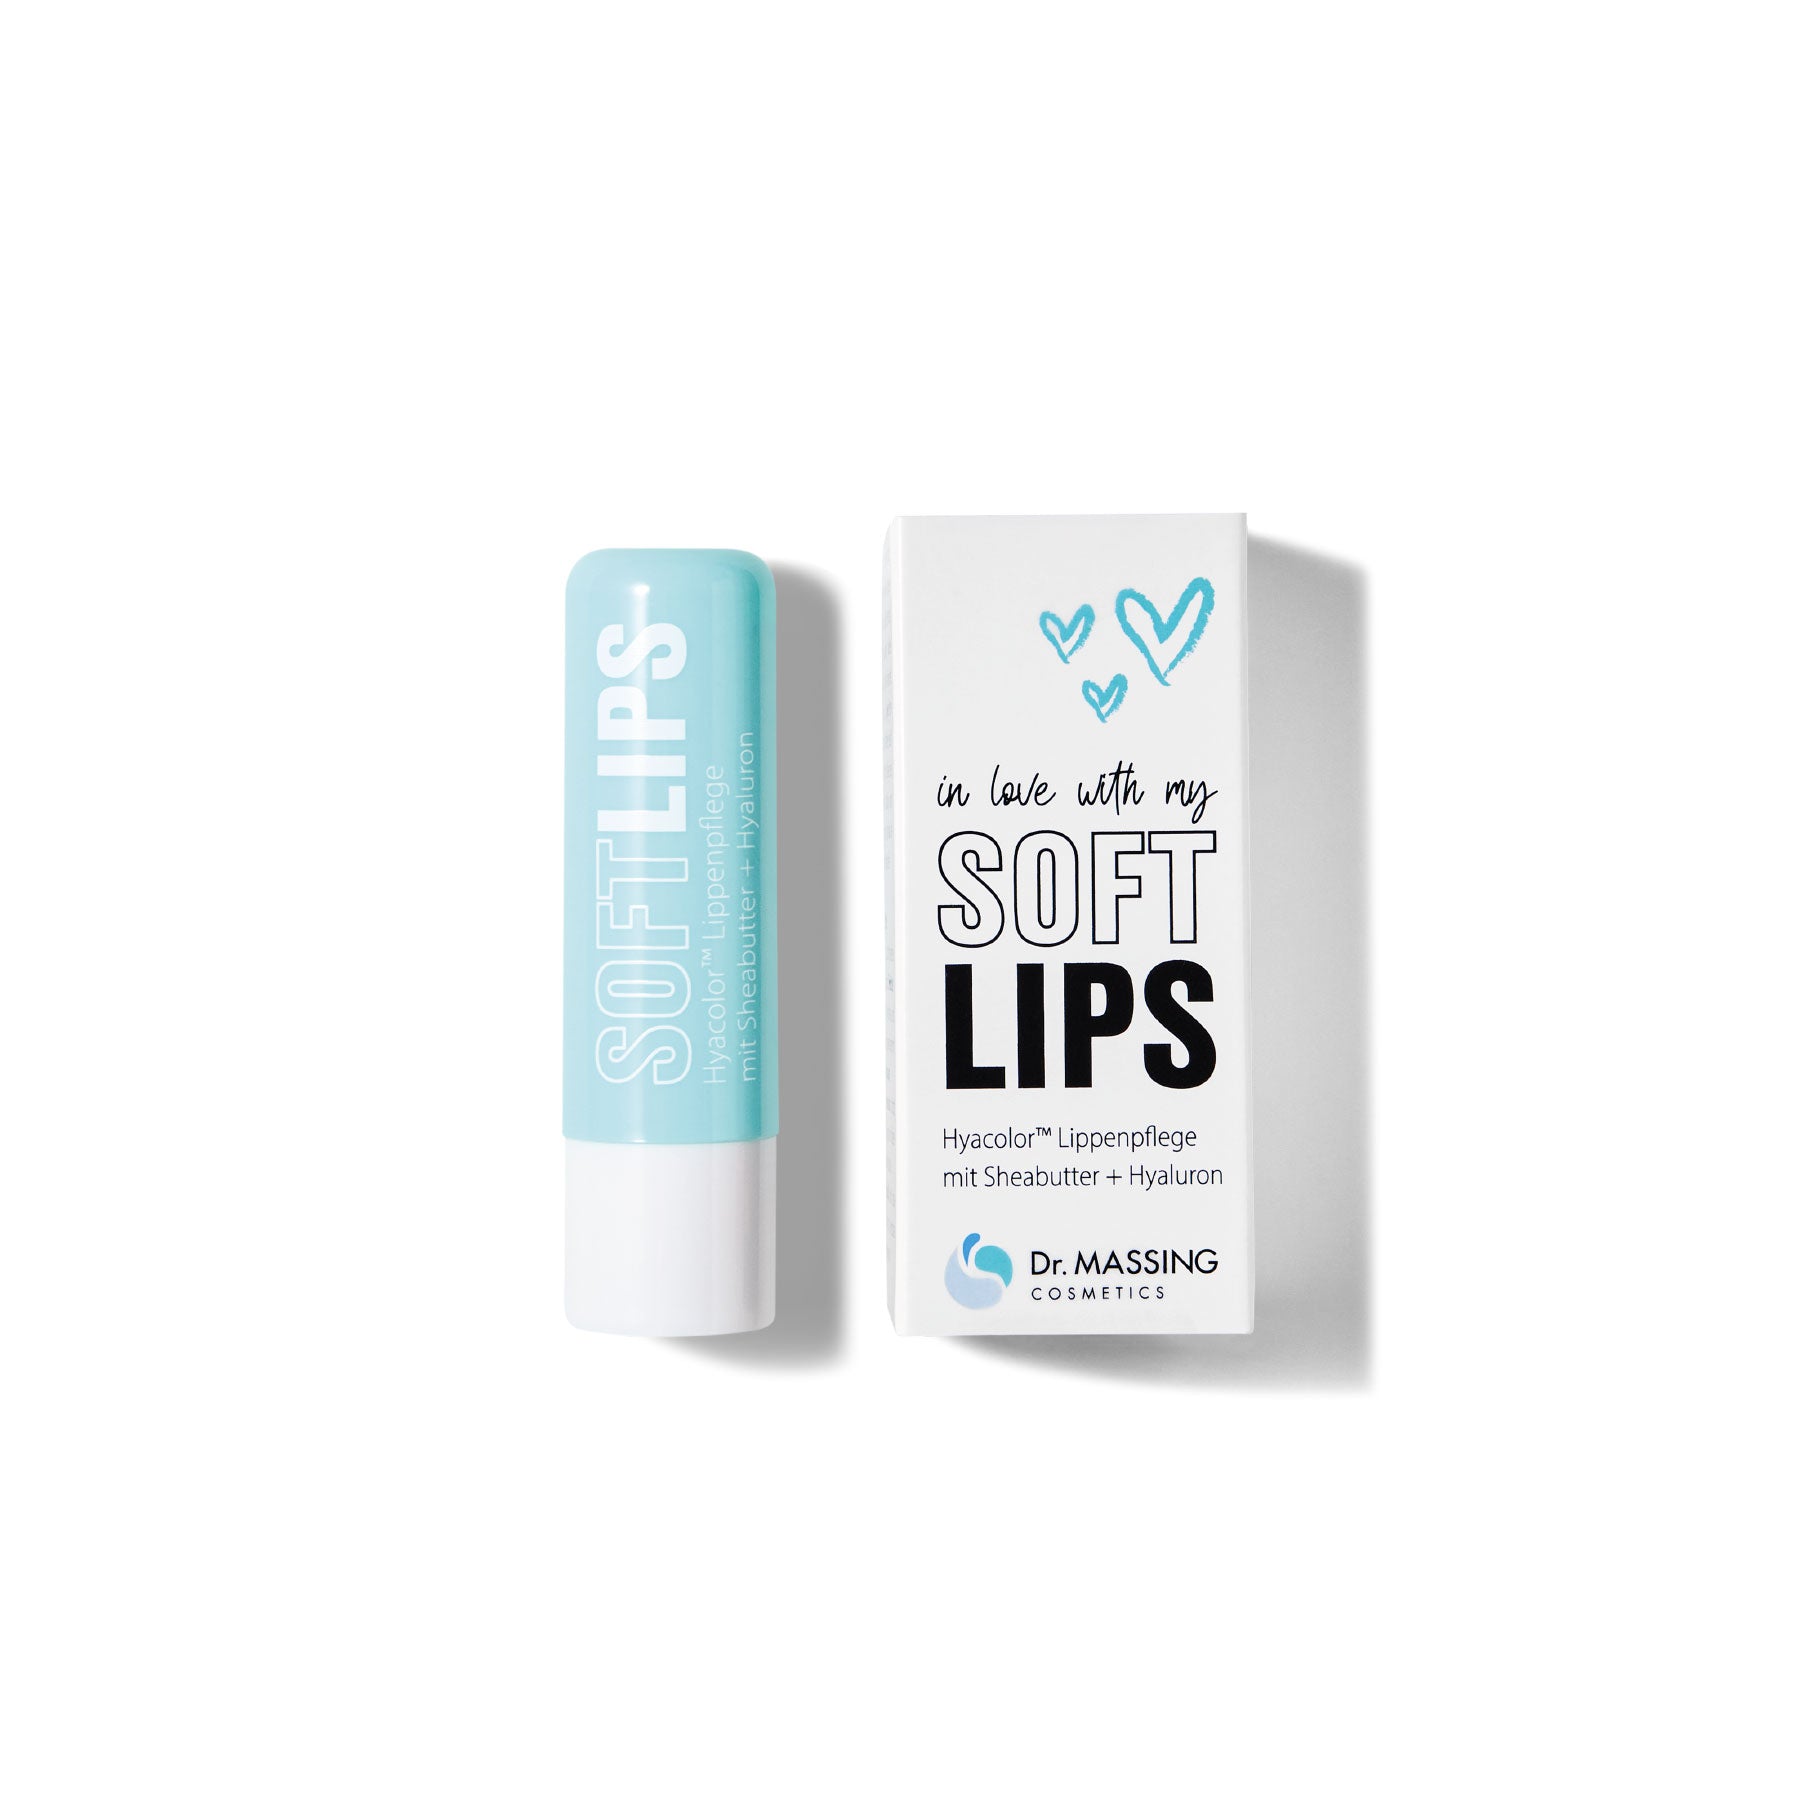  Freisteller Dr. Massing SoftLips Lippenpflege mit Hyaluron Lippenpflege mit Sheabutter Detailansicht petrolfarbige Verpackung